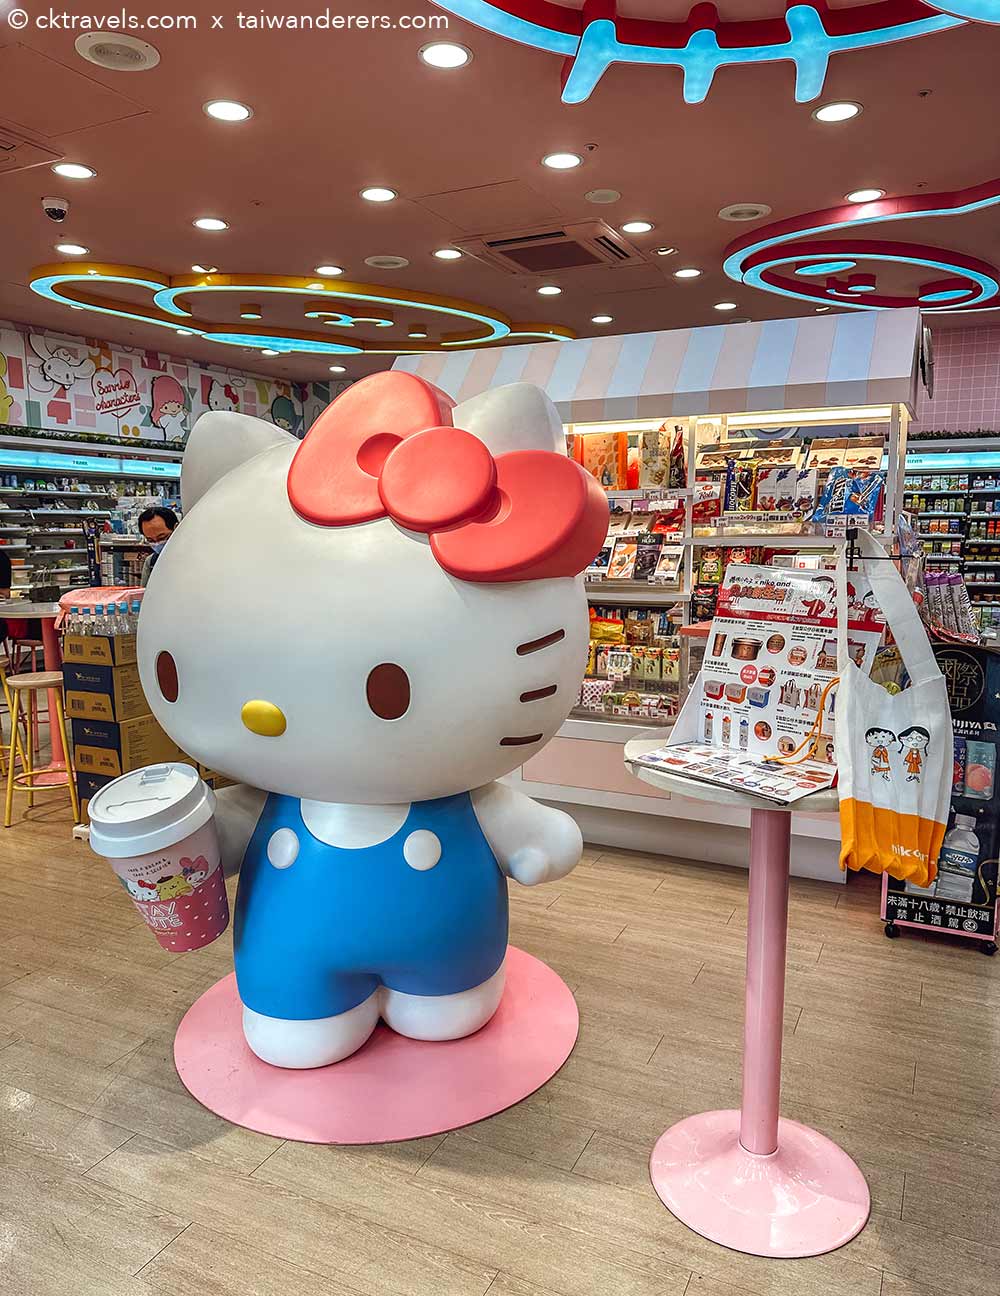 Sanrio Hello Kitty themed 7-eleven convenience store in Taipei Taiwan